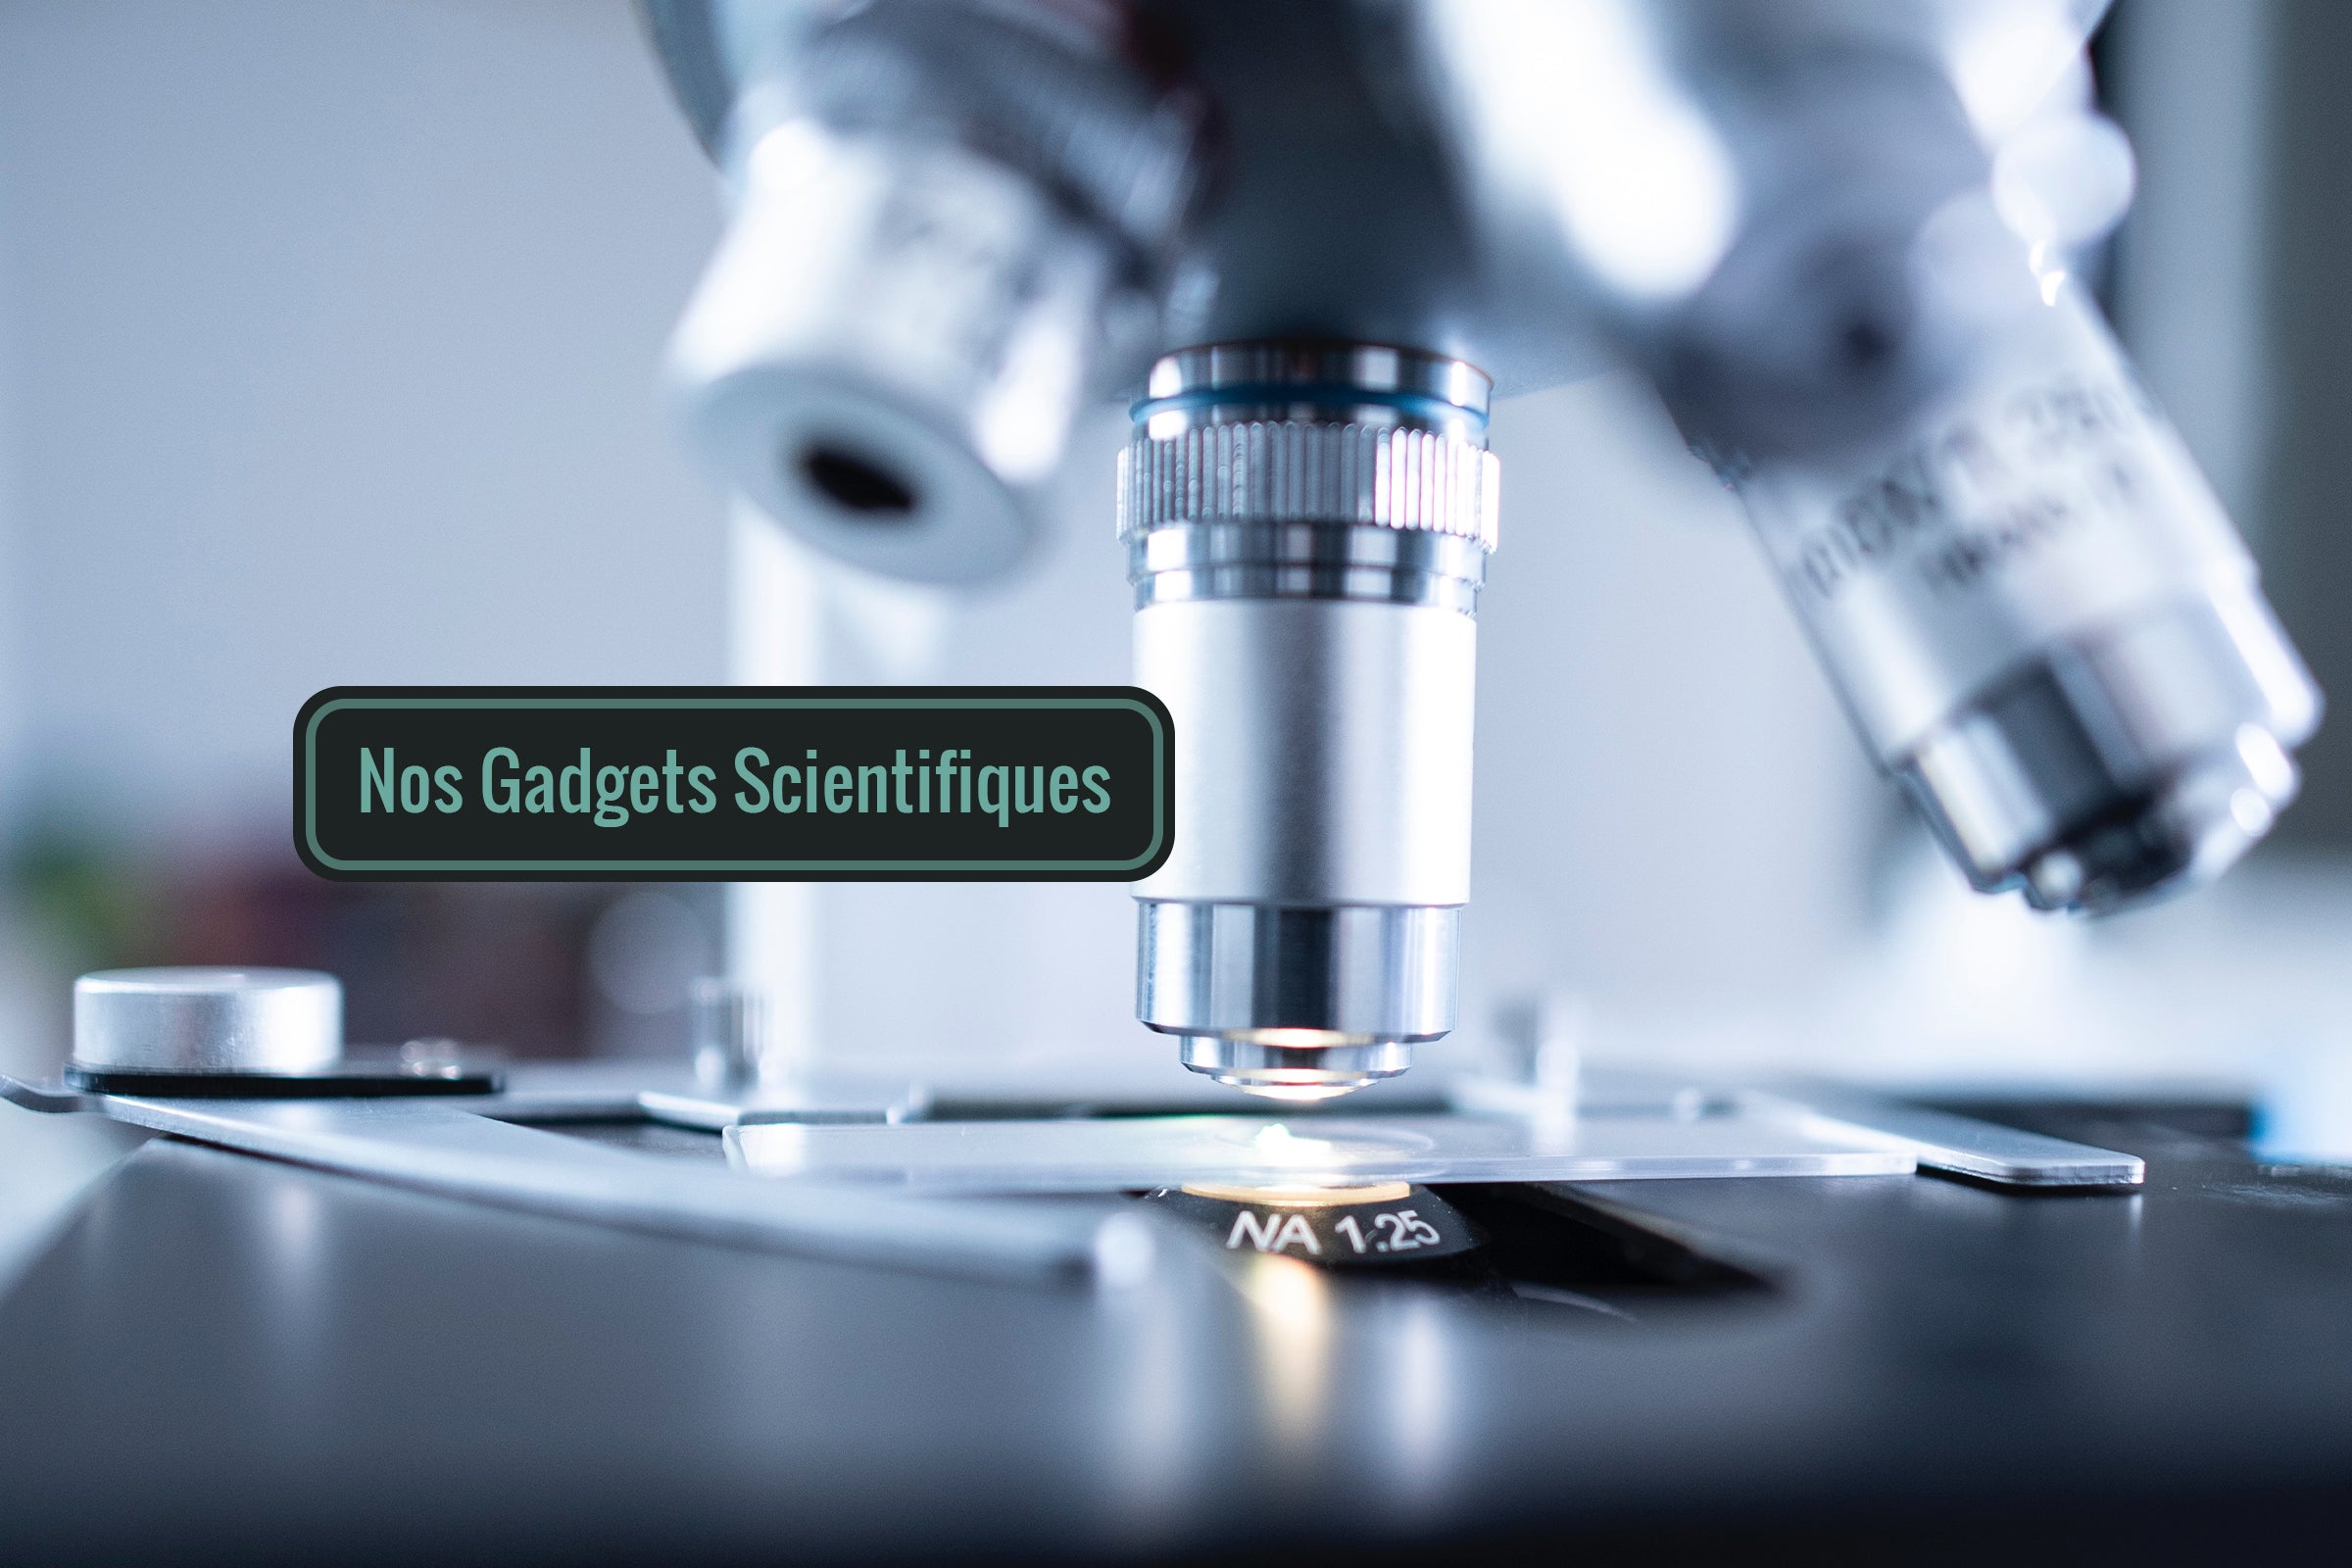 Gadgets Scientifique - Gadget-In-Utile